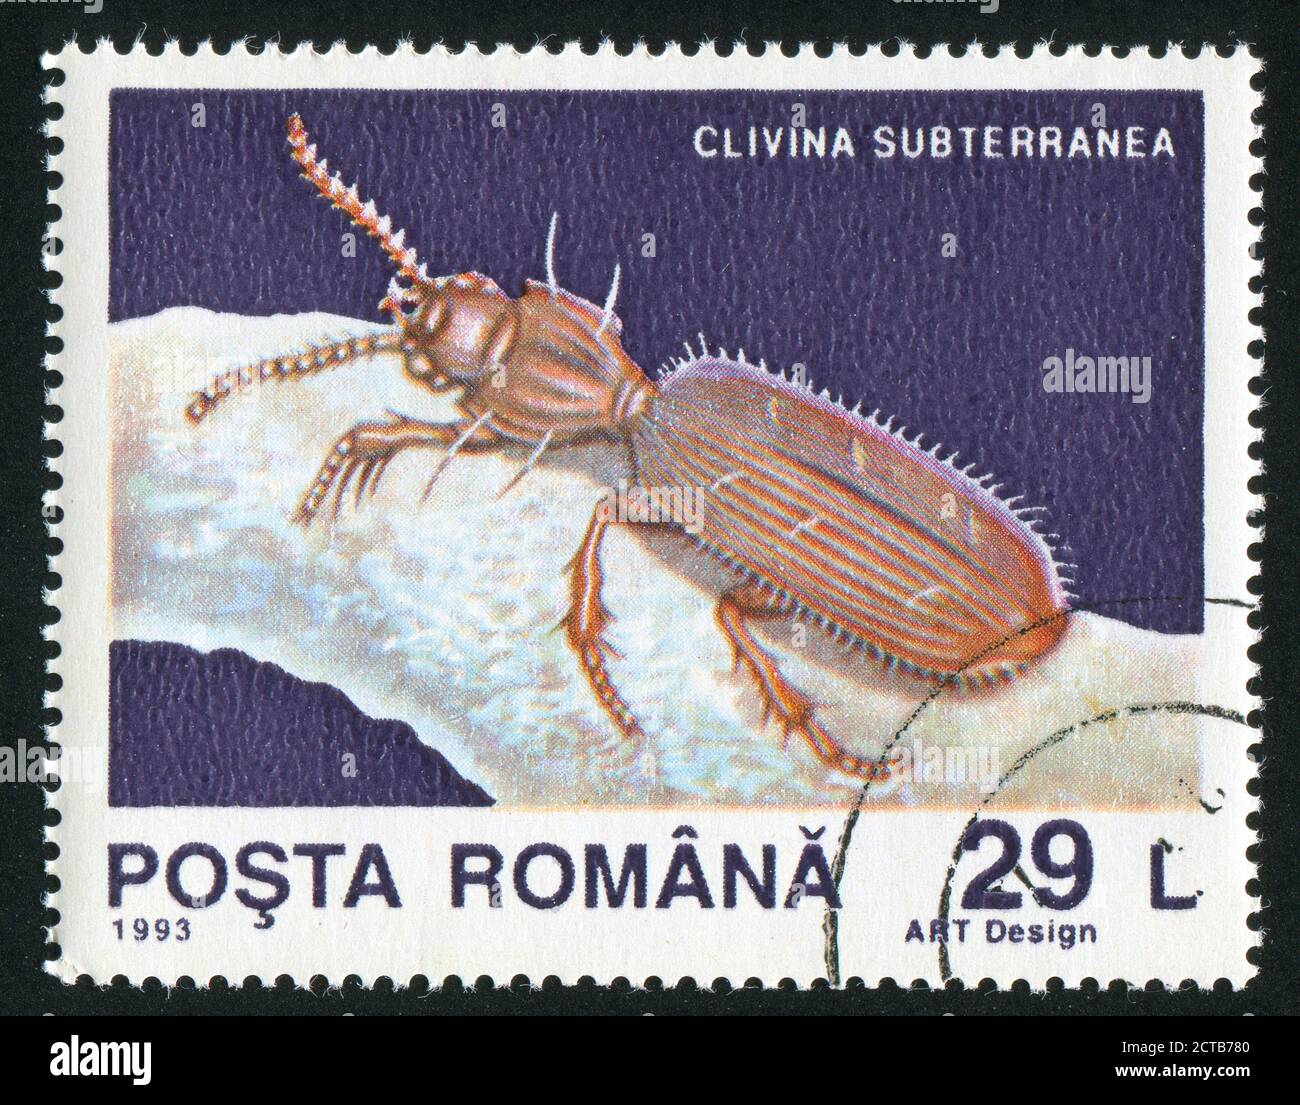 ROMANIA - CIRCA 1993: stamp printed by Romania, shows Clivina subterranea, circa 1993 Stock Photo